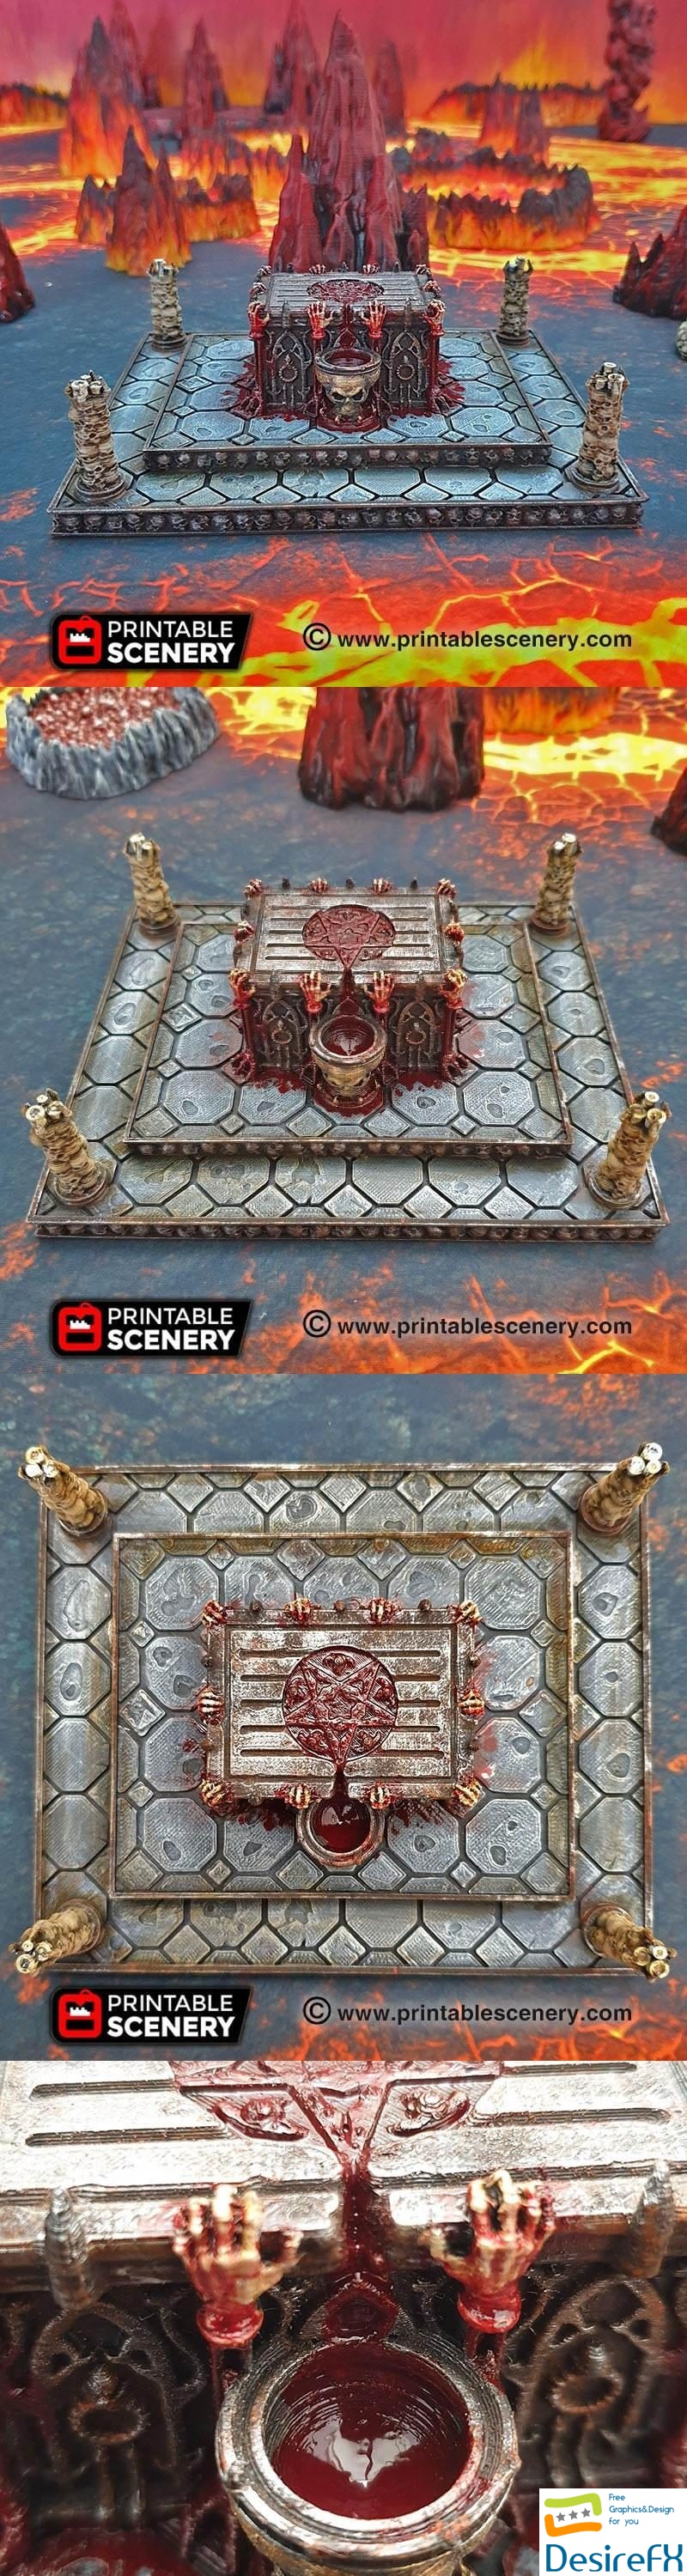 Printable Scenery - Sacrificial Altar - 3D Print